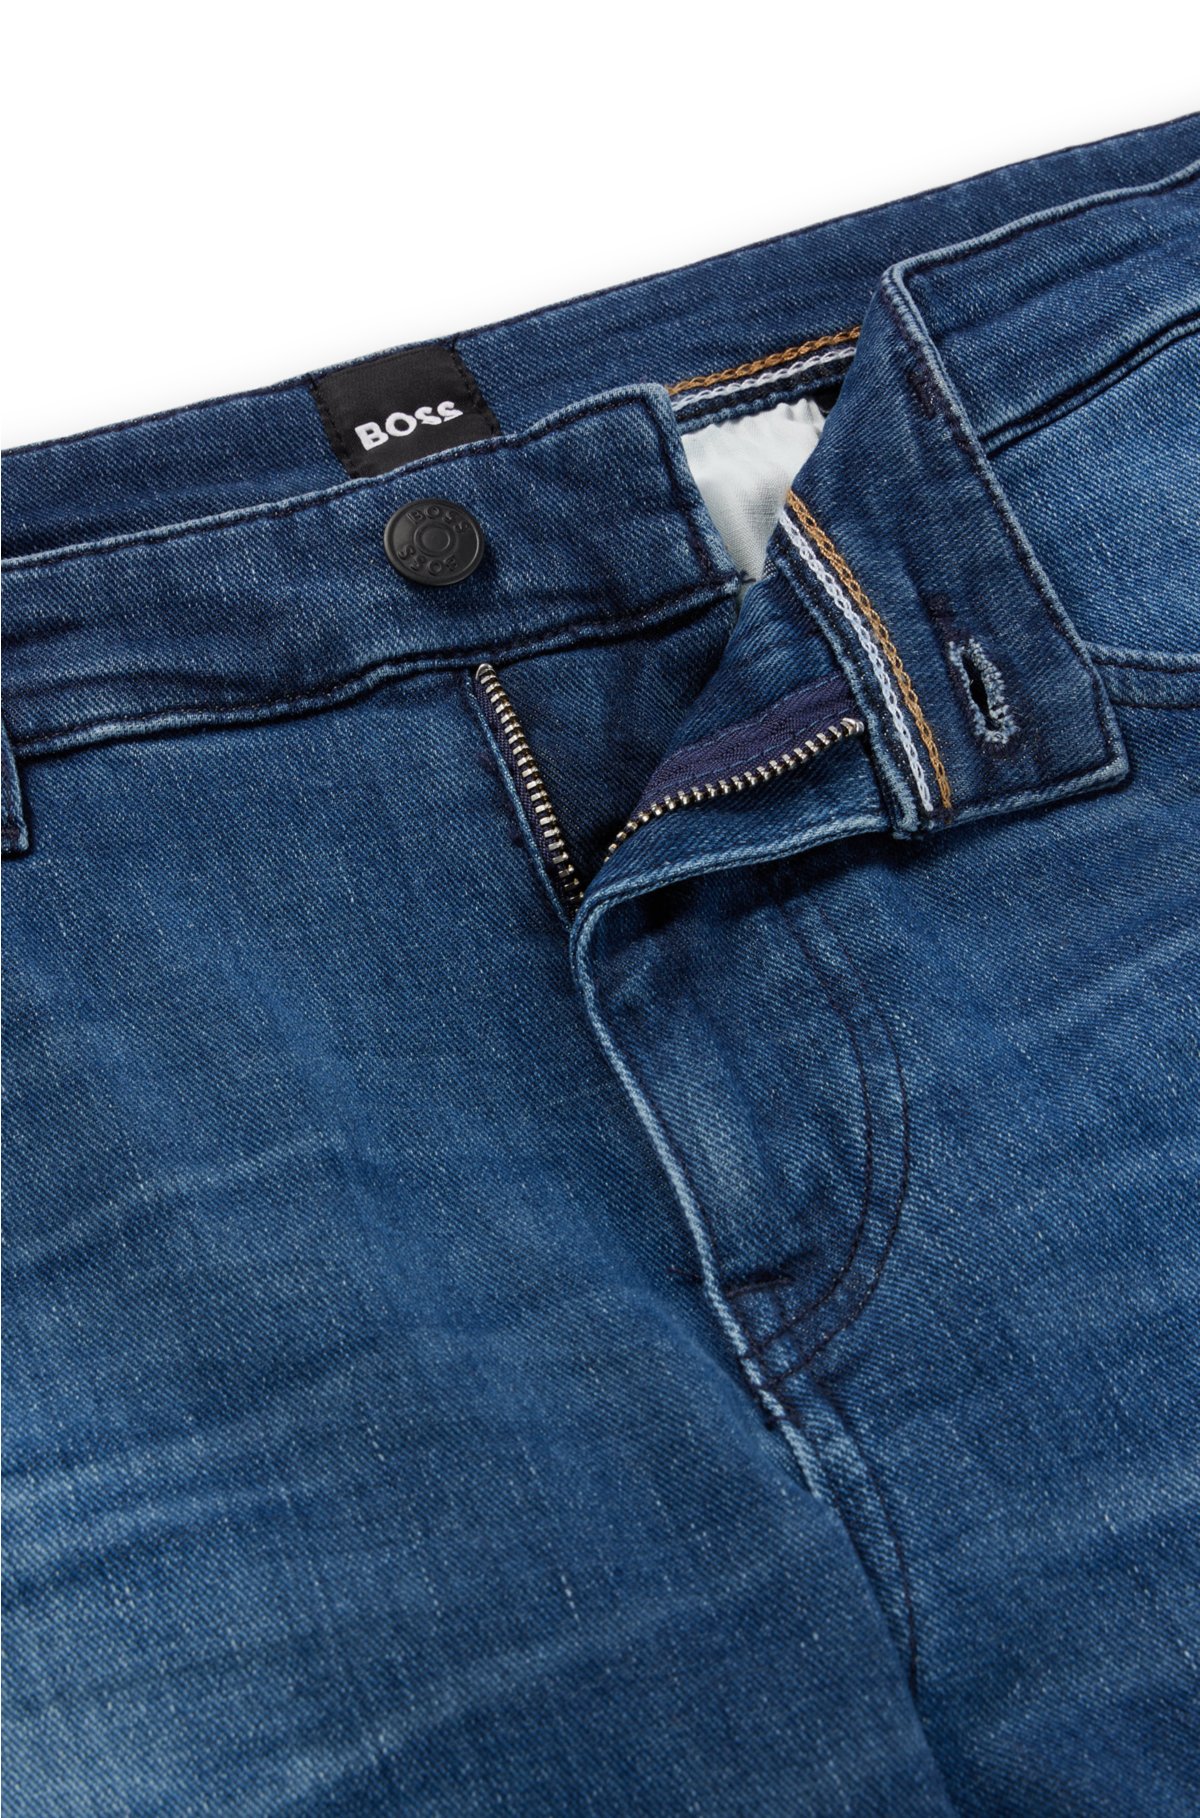 BOSS Slim-fit jeans in super-soft blue Italian denim